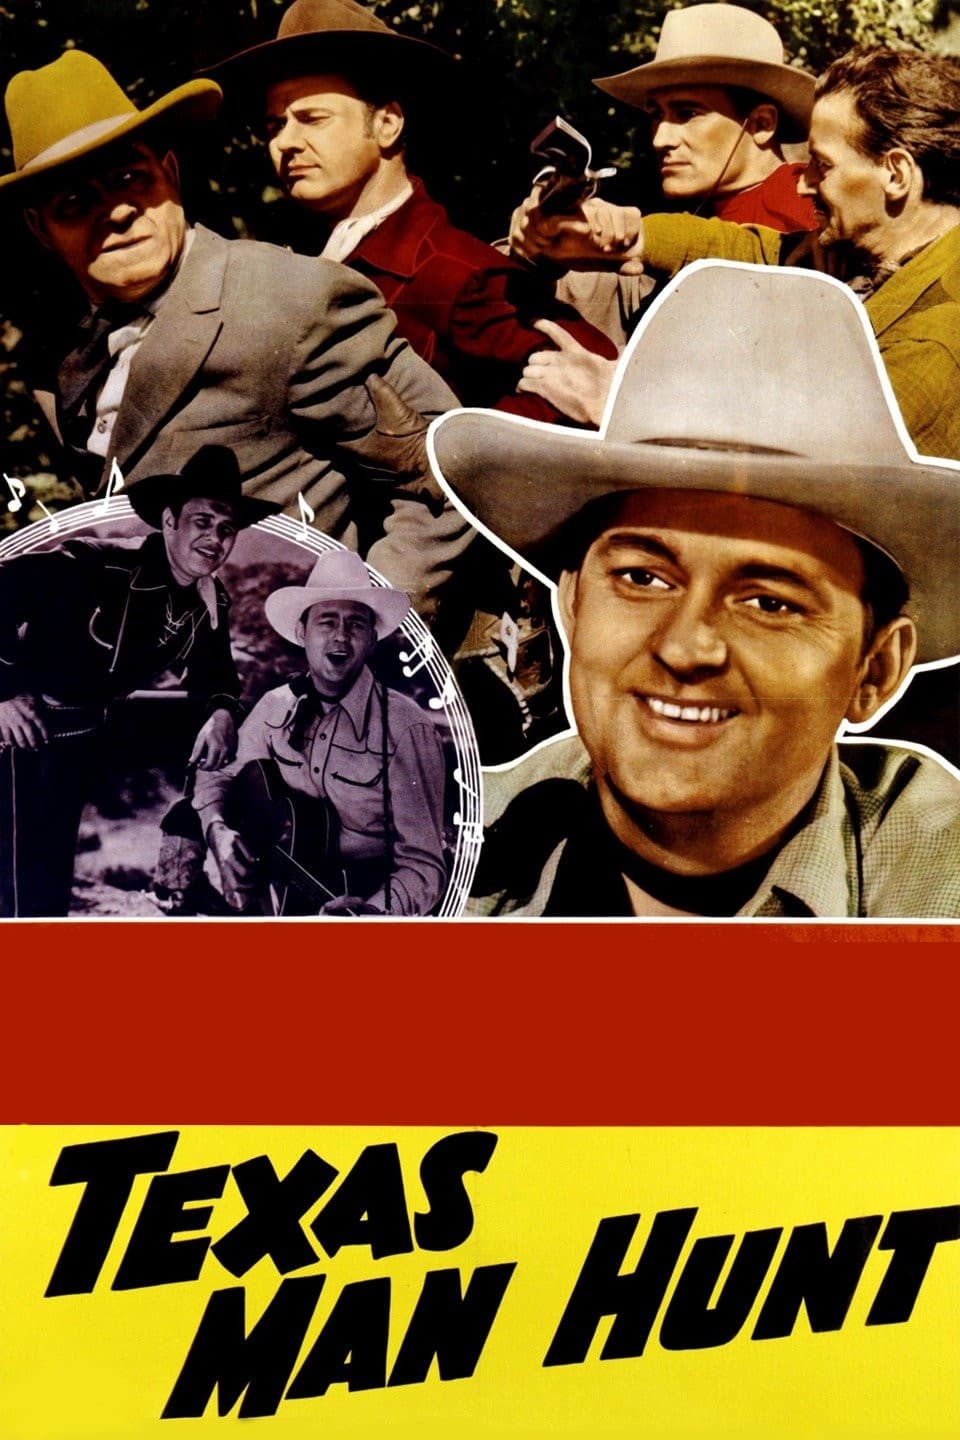 Texas Man Hunt (1942)